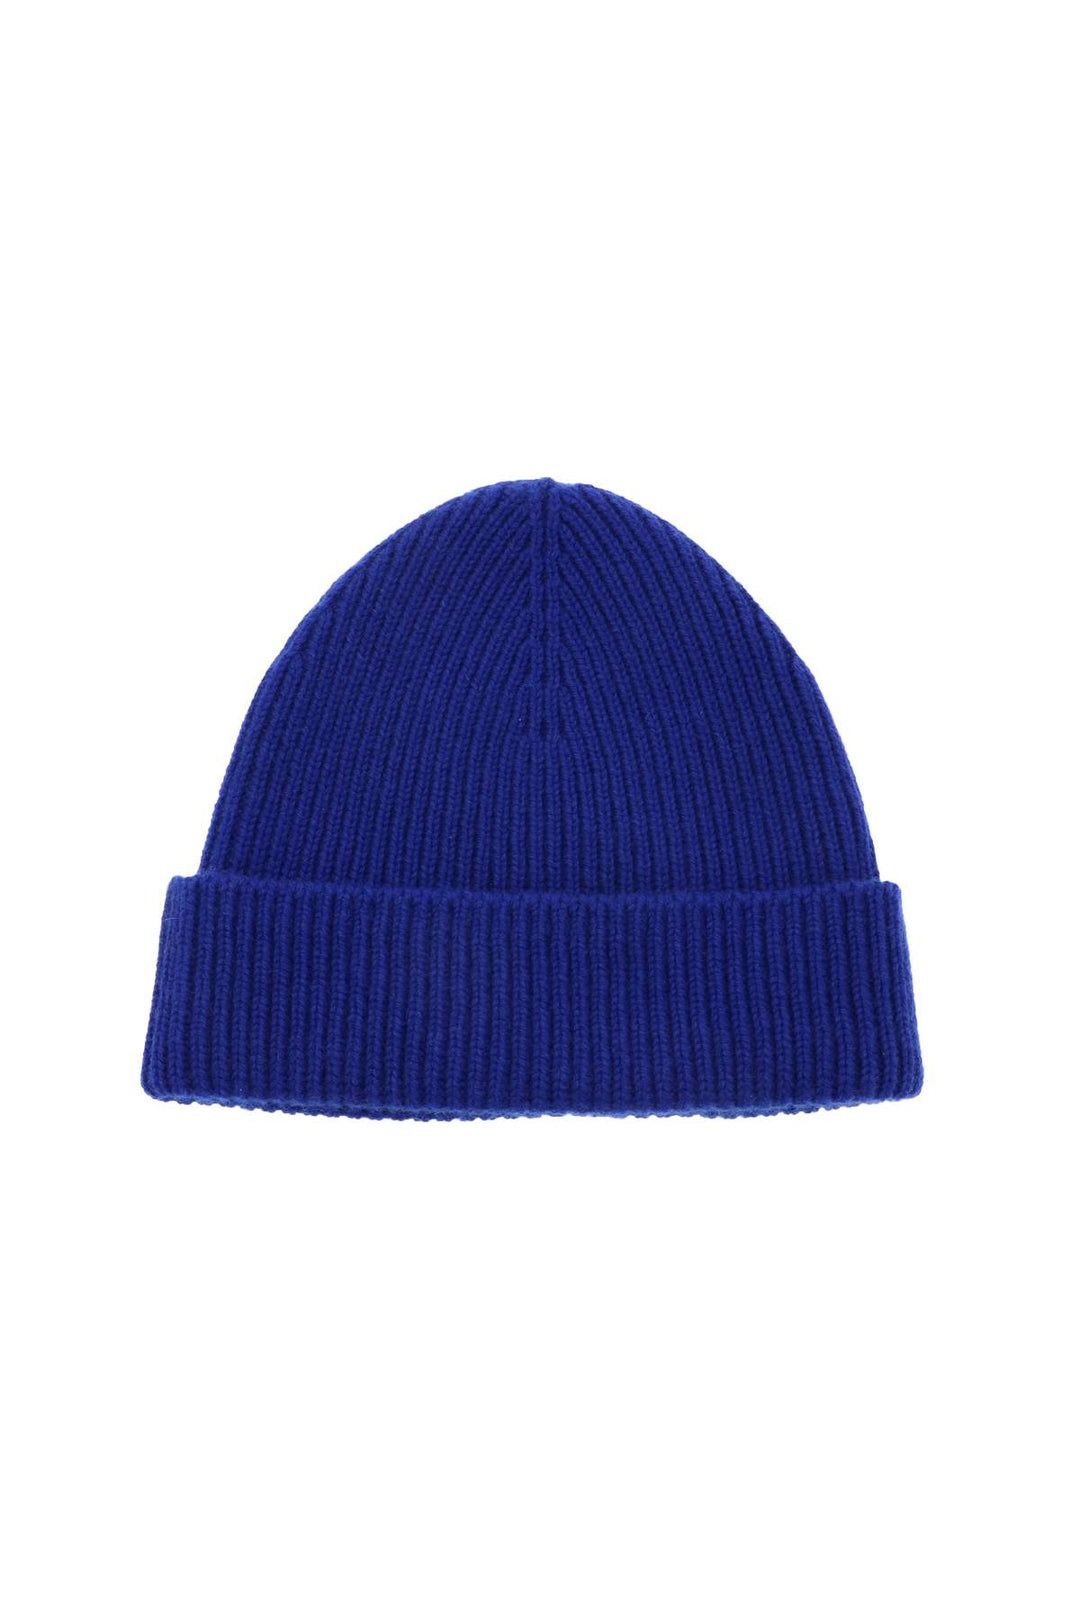 Burberry Ekd Beanie Hat   Blu